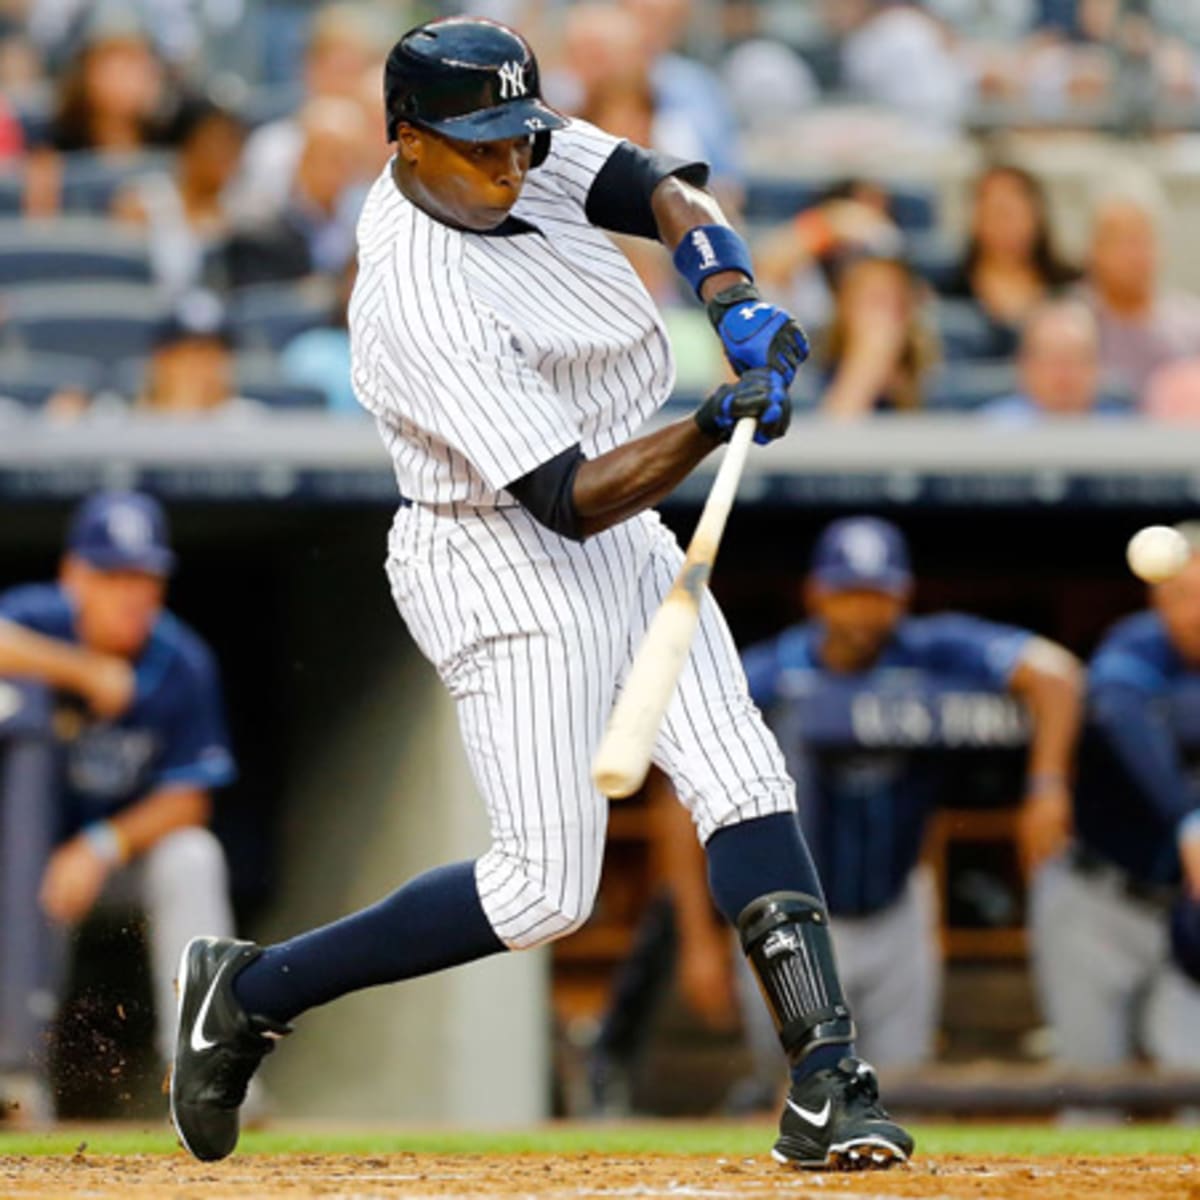 Alfonso Soriano's debut shows he's no Yankees savior - Sports